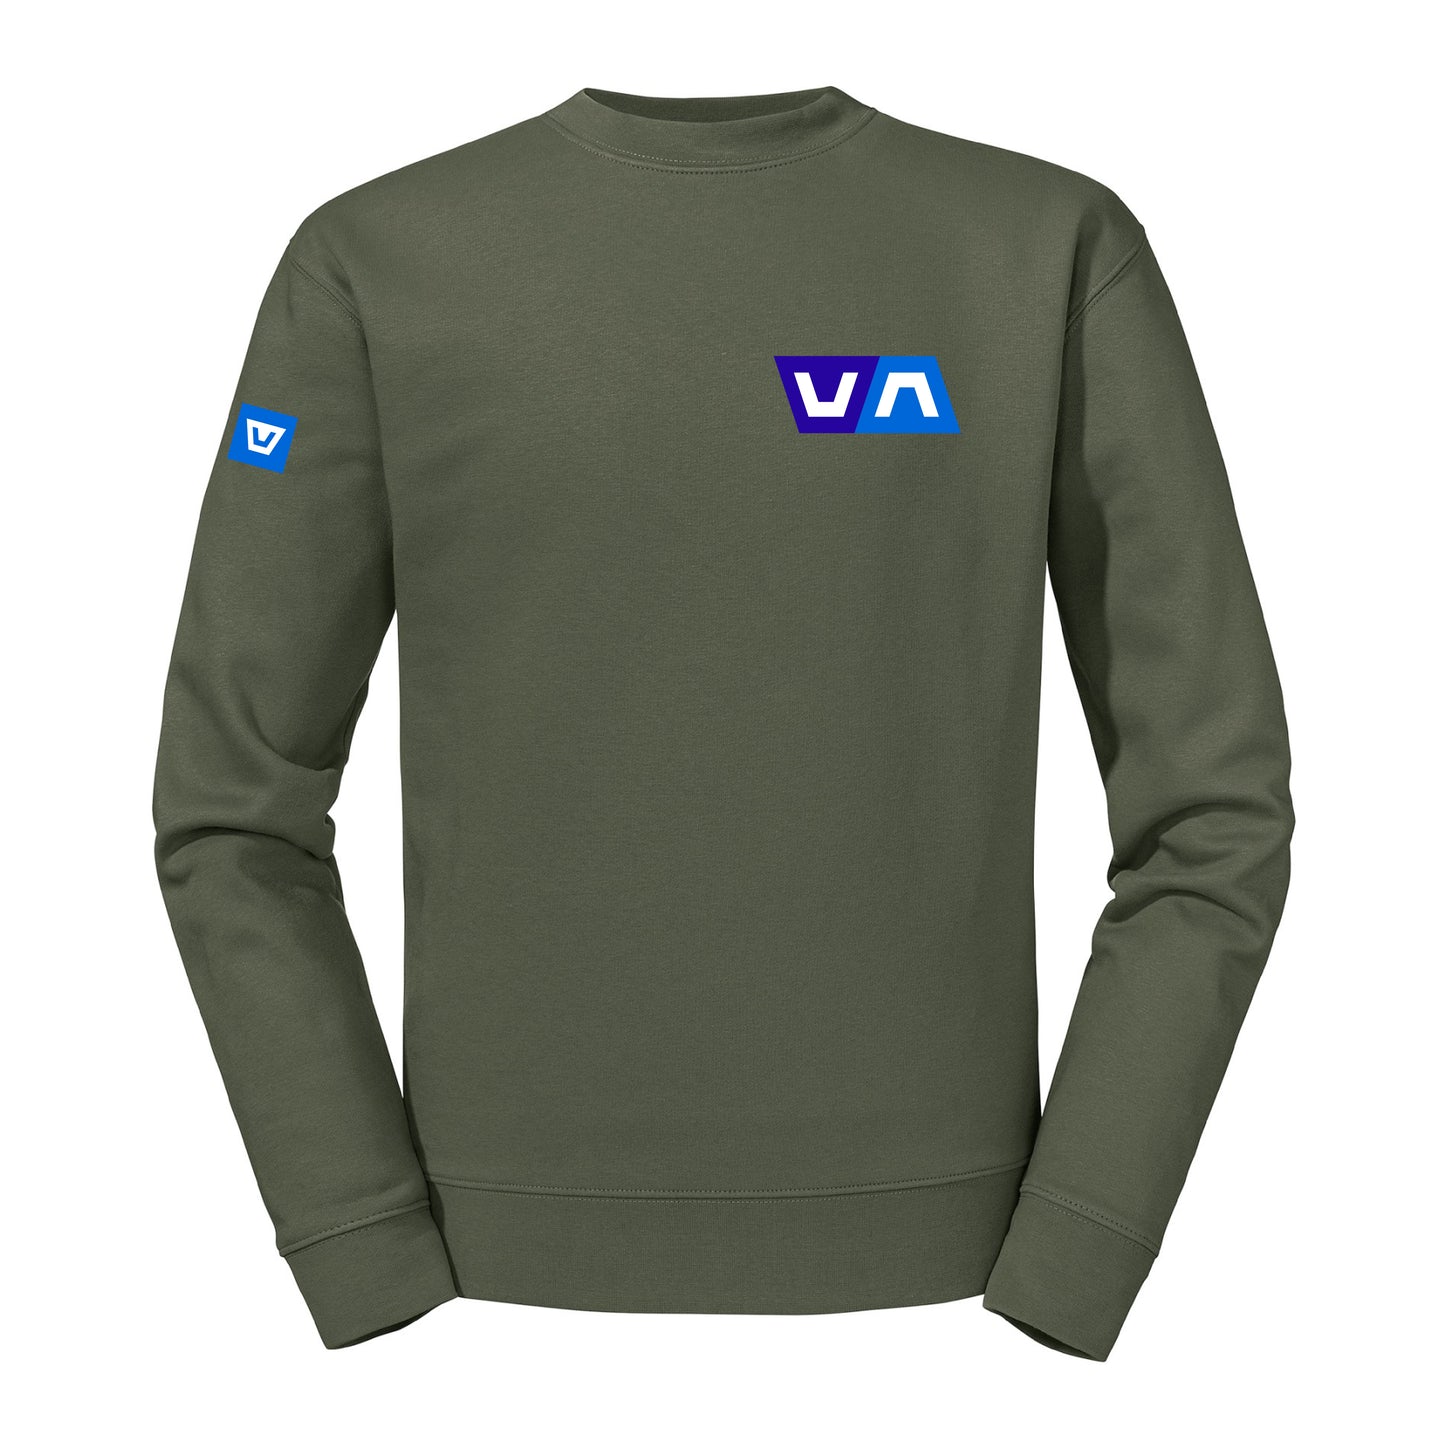 Marine Force Waves Sweatshirt